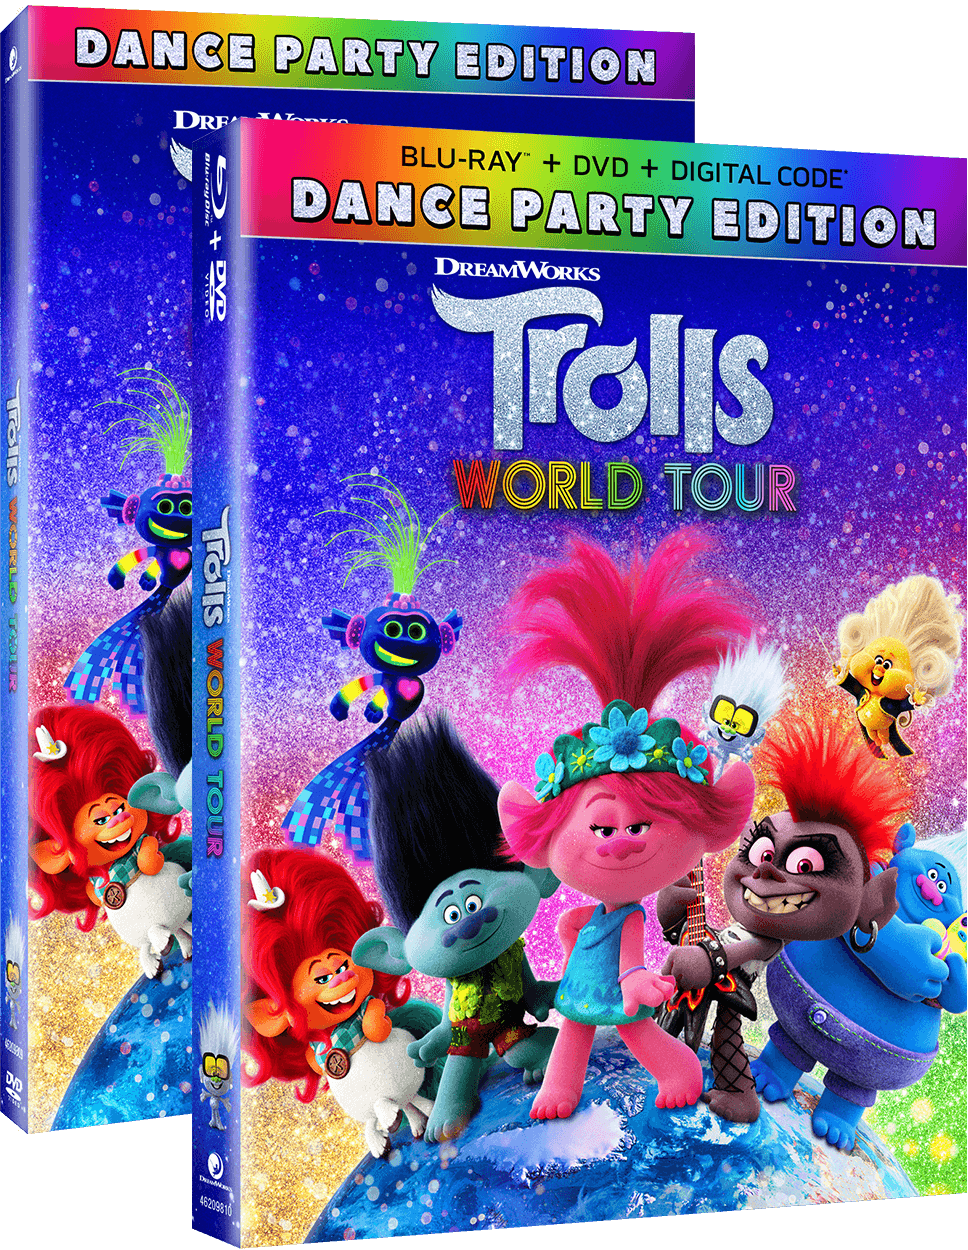 Watch Trolls World Tour Available Now On 4k Ultra Hd Blu Ray Dvd Digital Dreamworks